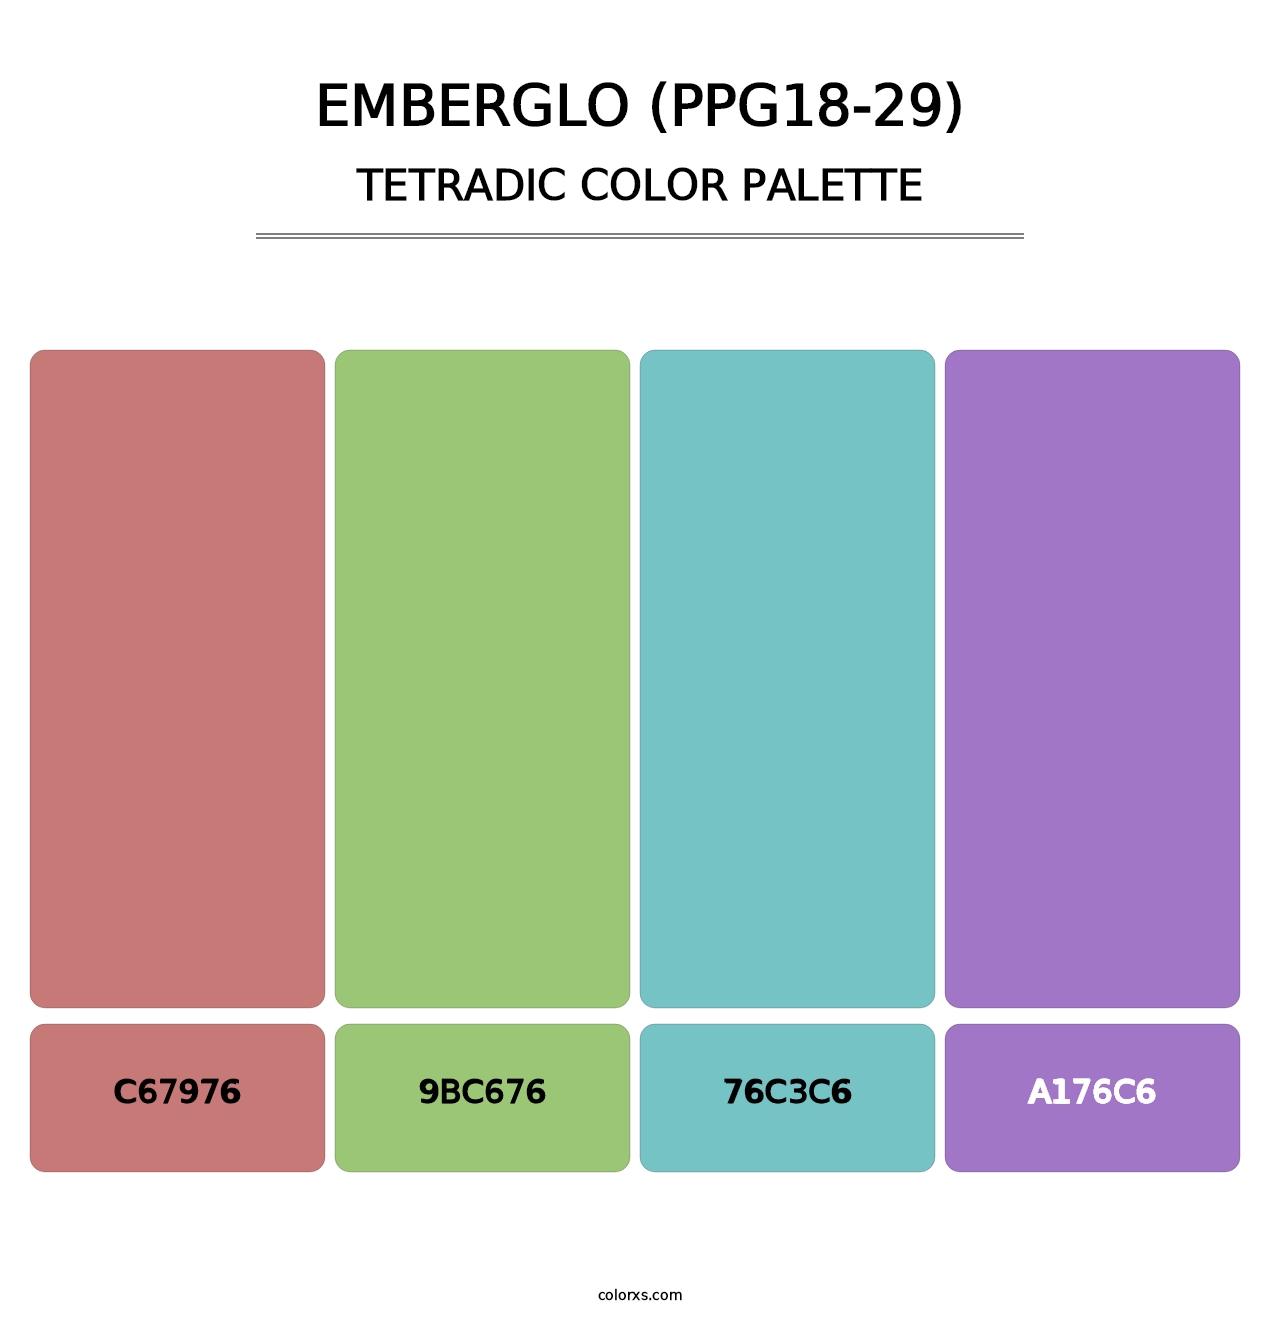 Emberglo (PPG18-29) - Tetradic Color Palette